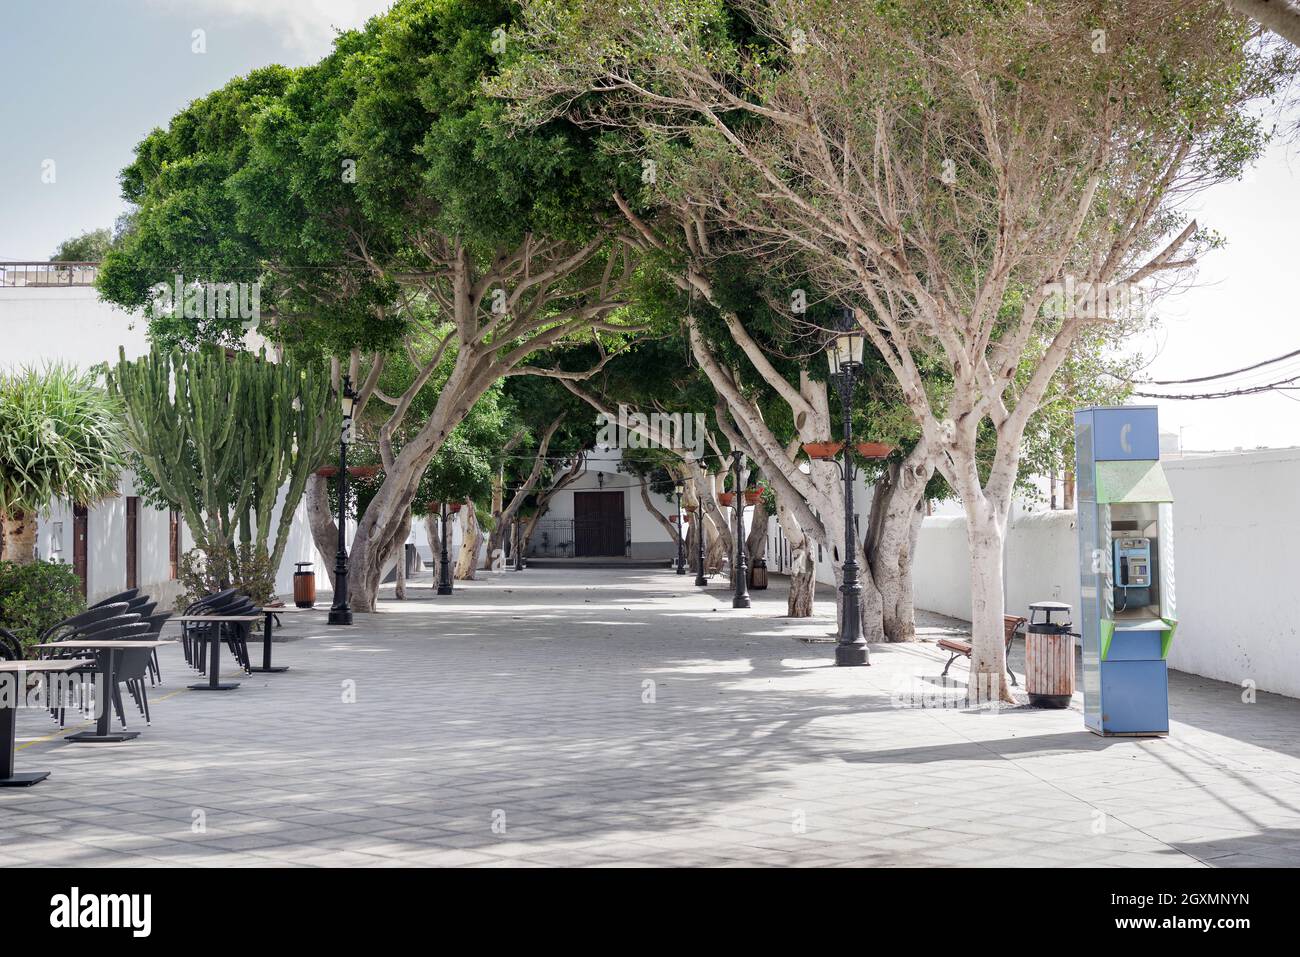 Centre-ville calme de l'une des plus anciennes colonies de Lanzarote, Haria - Lanzarote, îles Canaries Banque D'Images